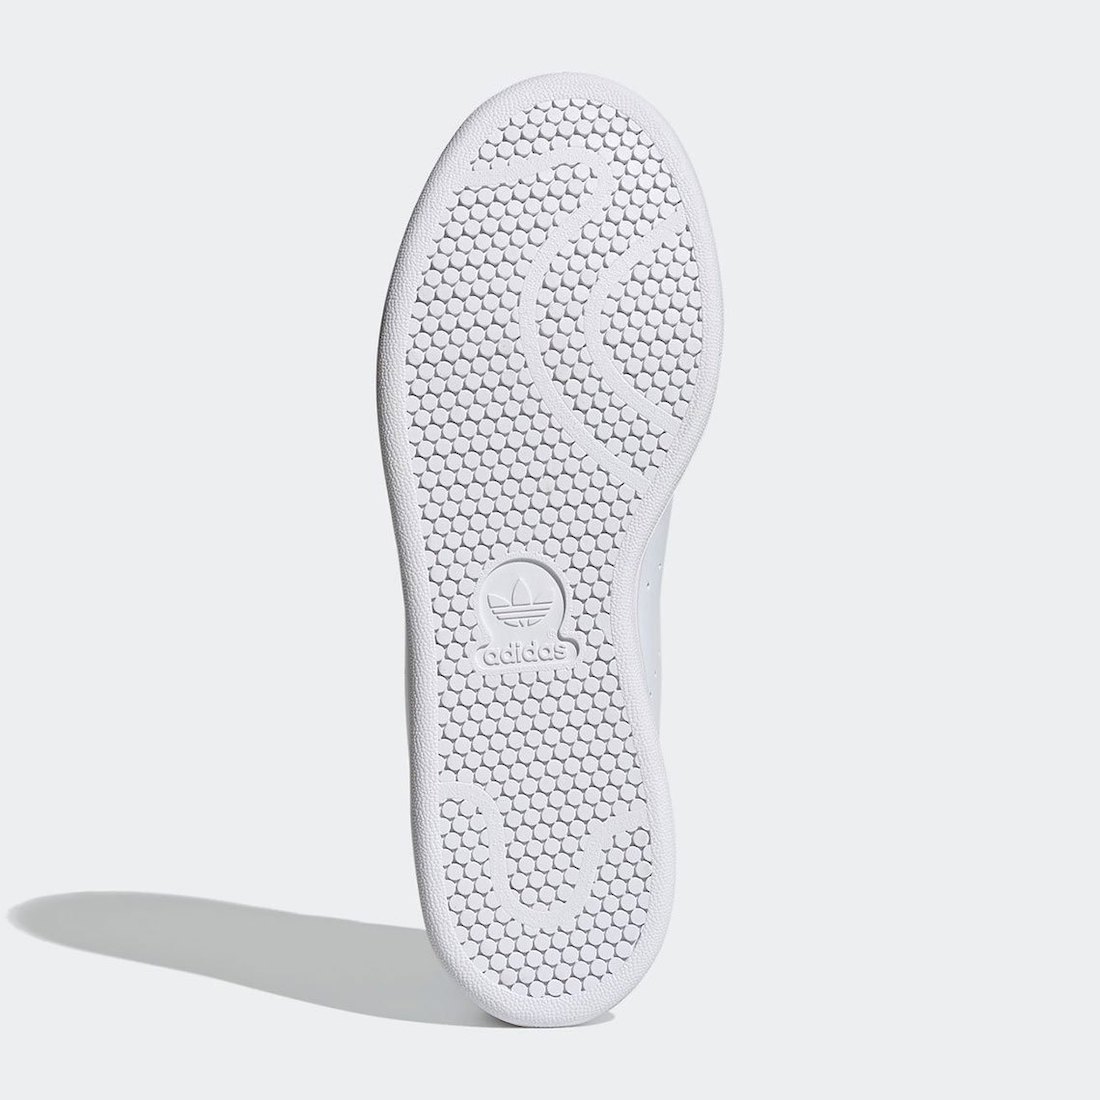 adidas art basel sneakers lawsuit White Green FX5509 Release Date